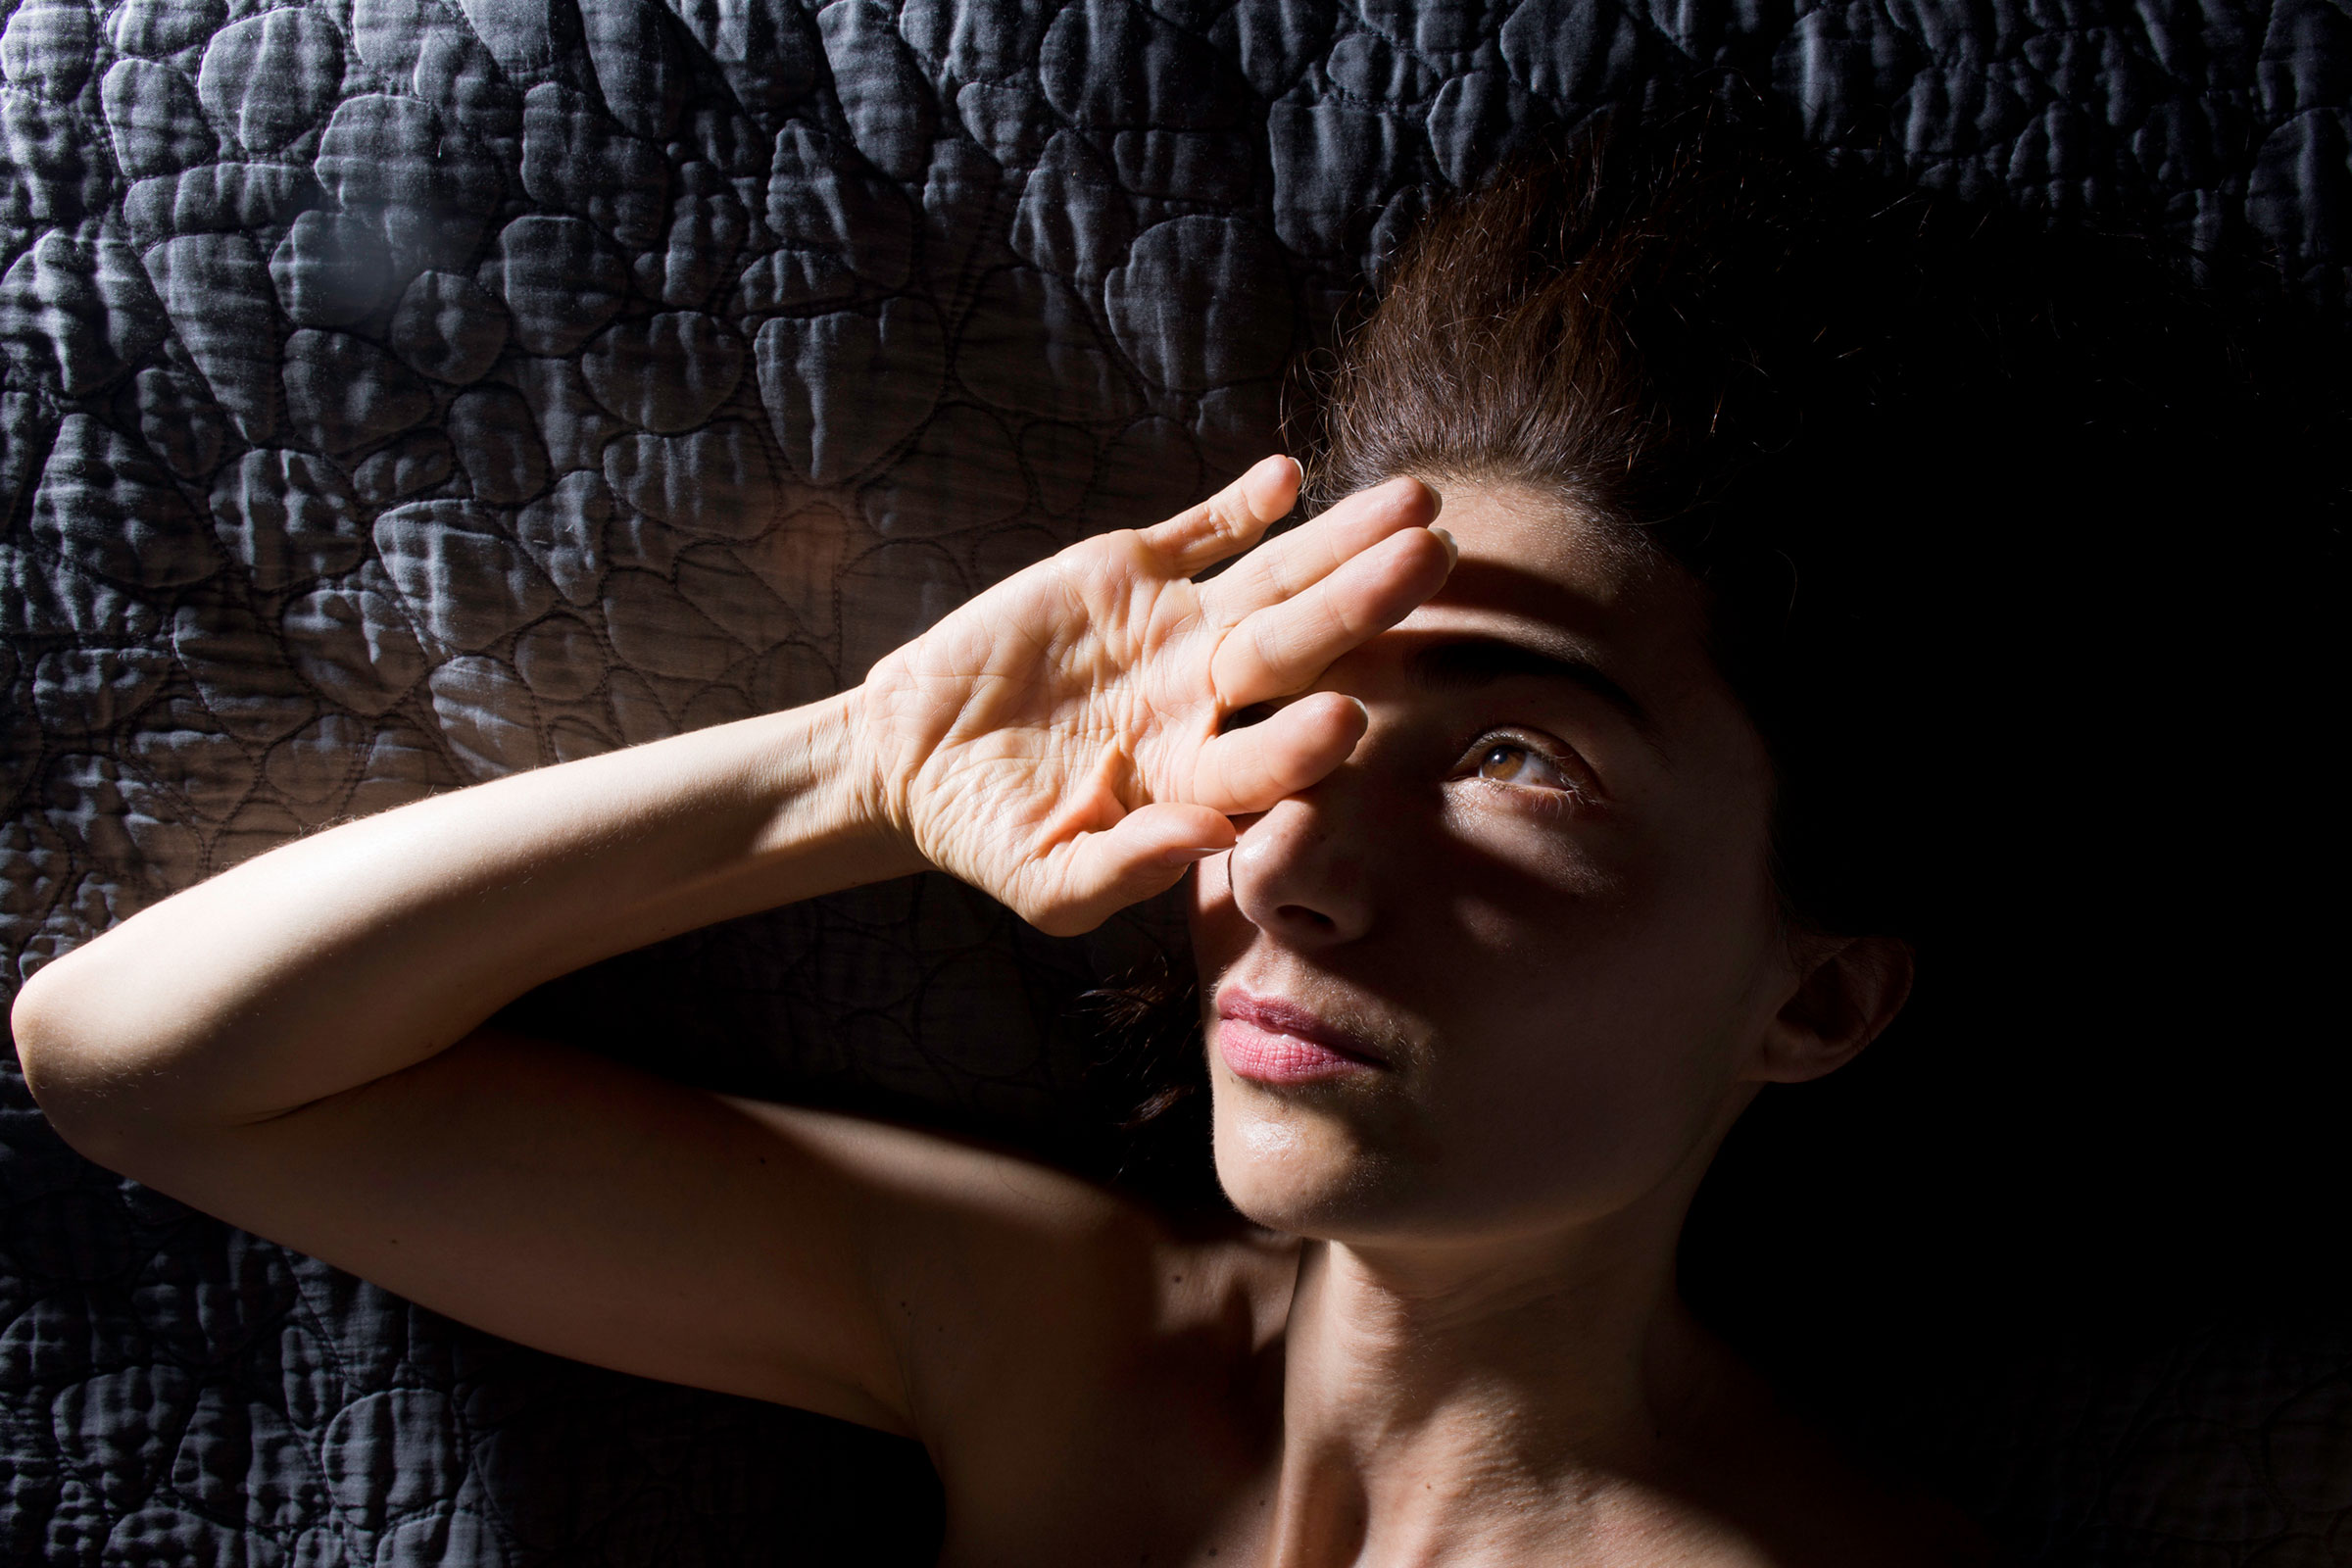 Photographer Elinor Carucci experienced insomnia in her 40s. (Elinor Carucci—Courtesy Edwynn Houk Gallery)